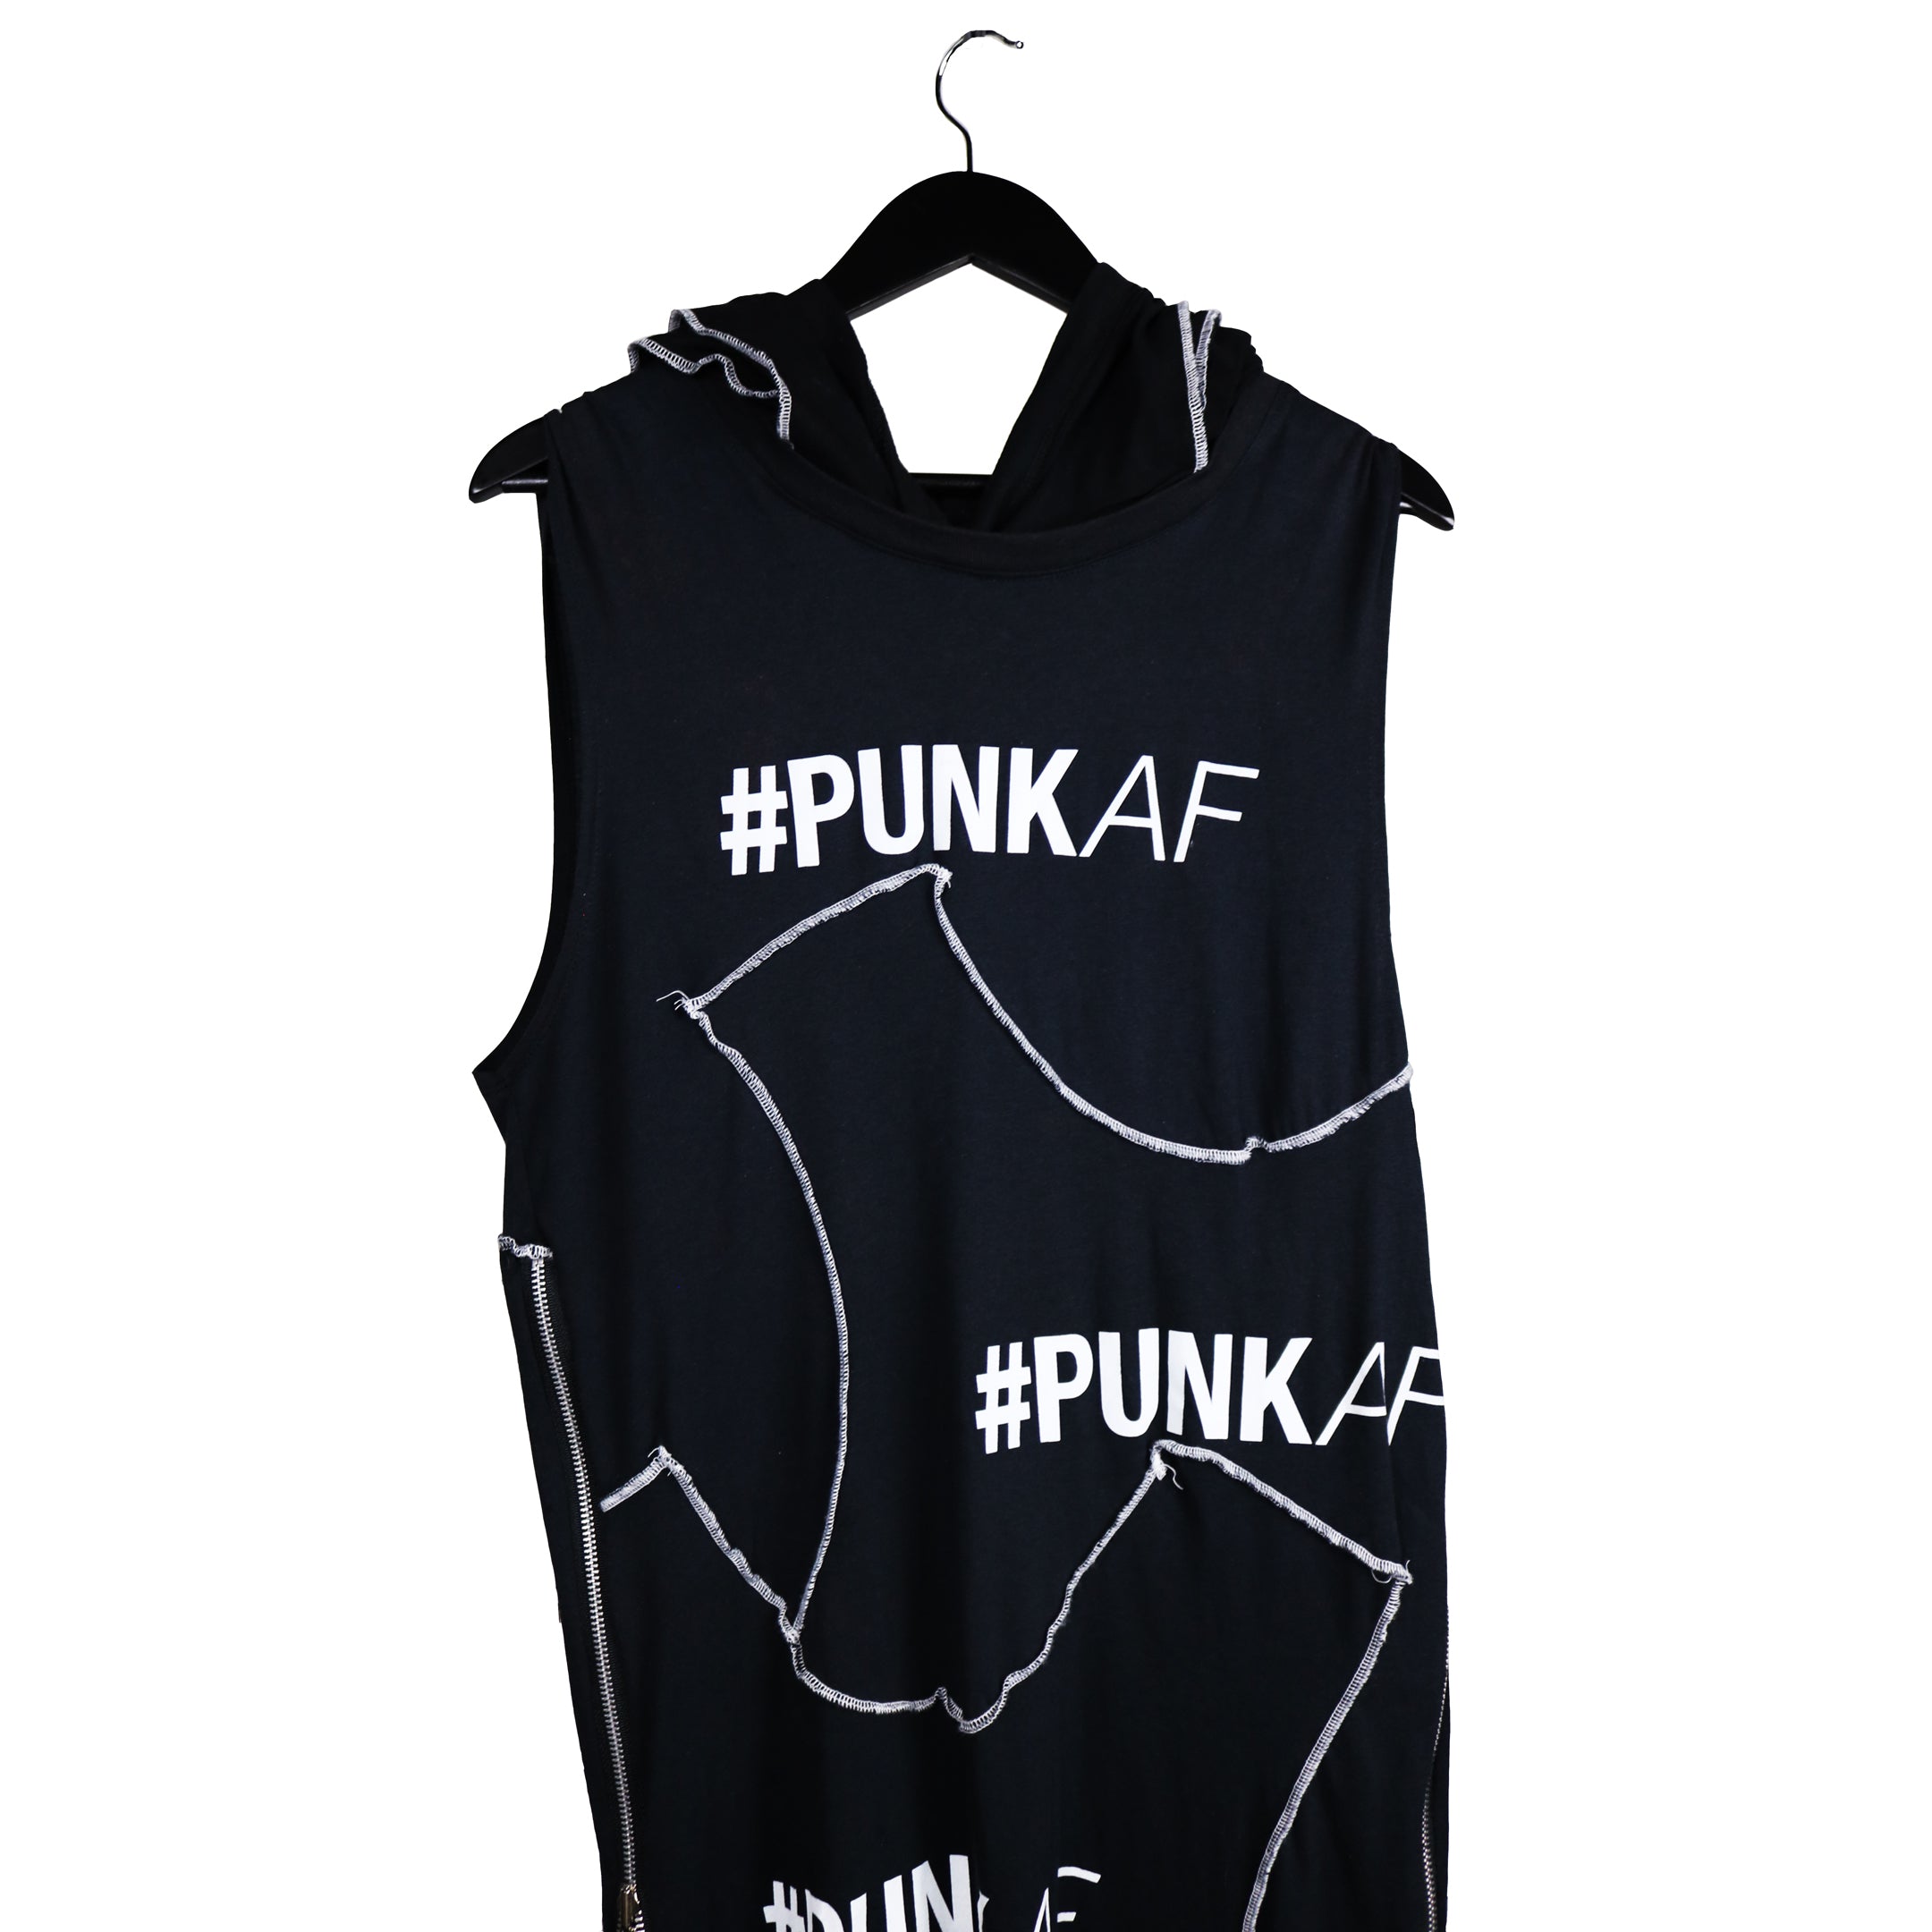 upcycled t-shirt tunic dress with hood #PunkAF